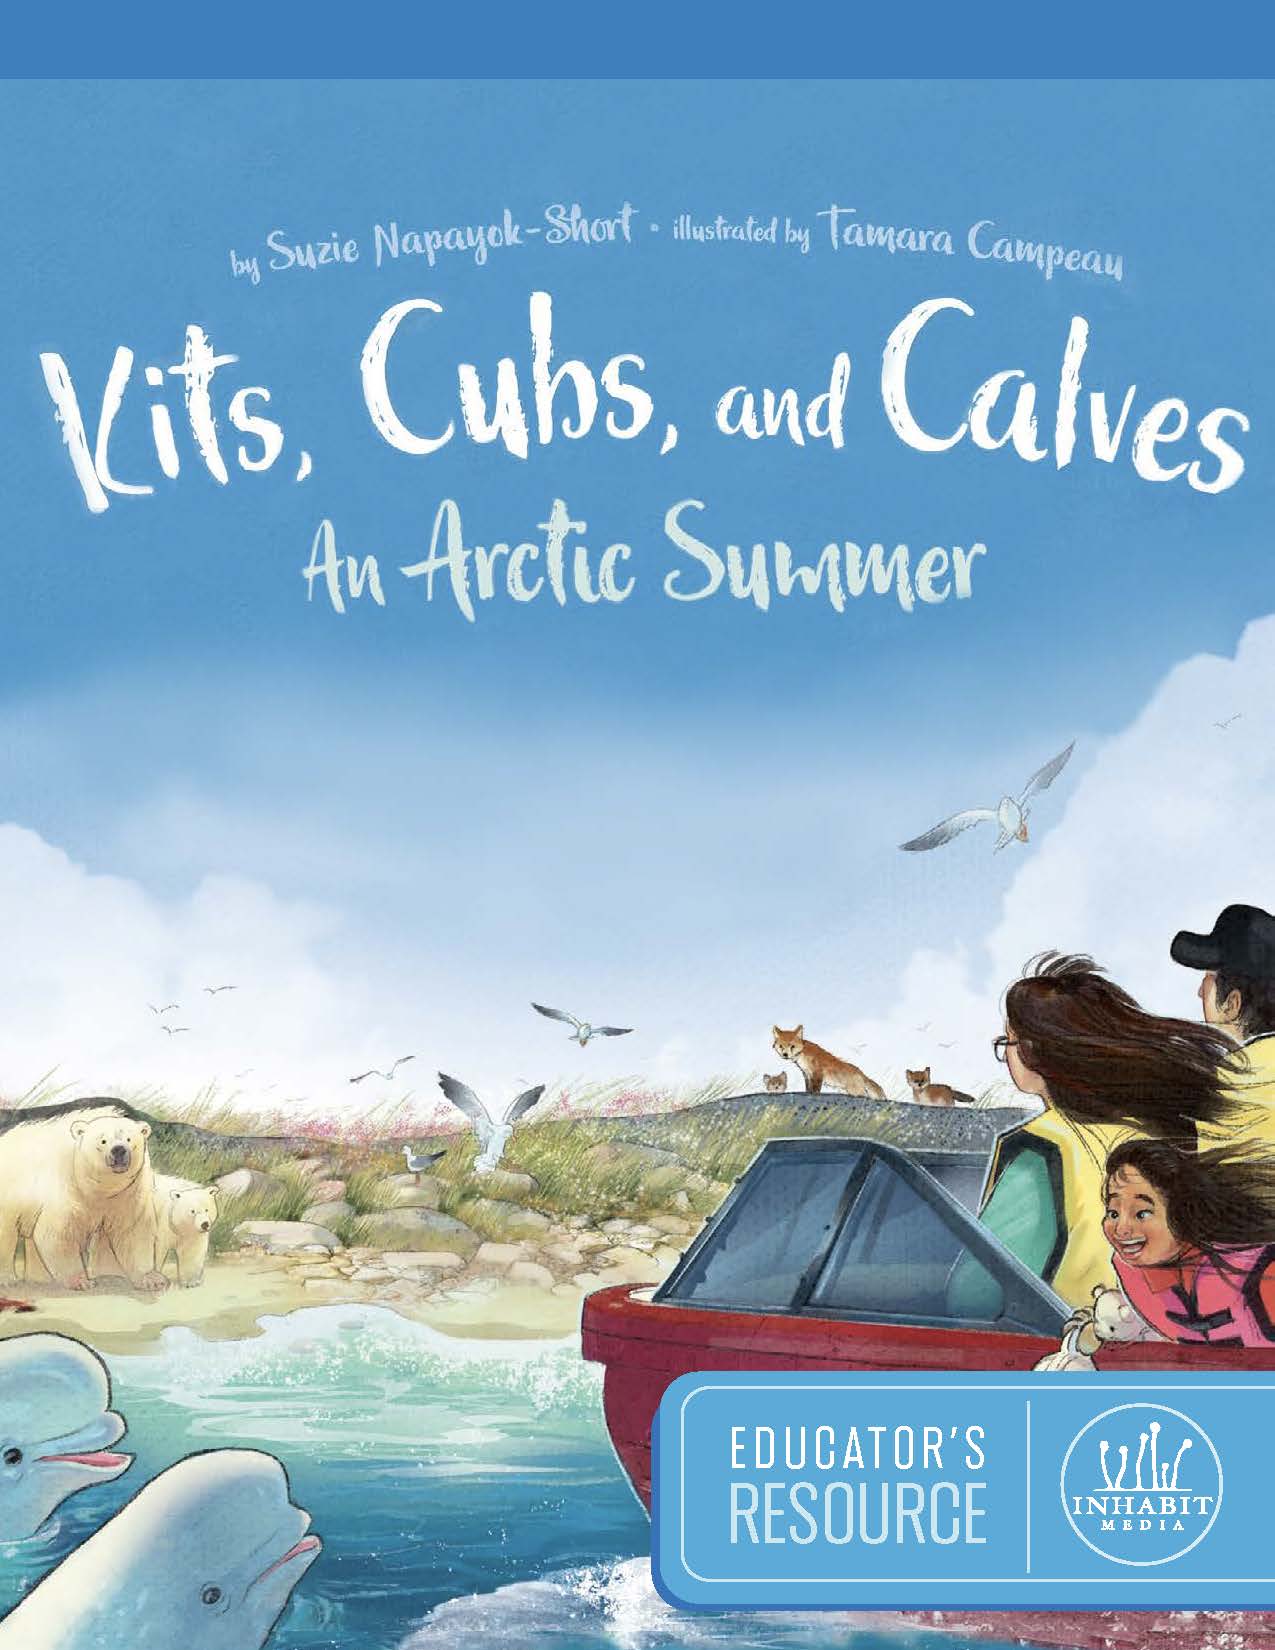 Kits, Cubs, and Calves: An Arctic Summer Educator's Resource